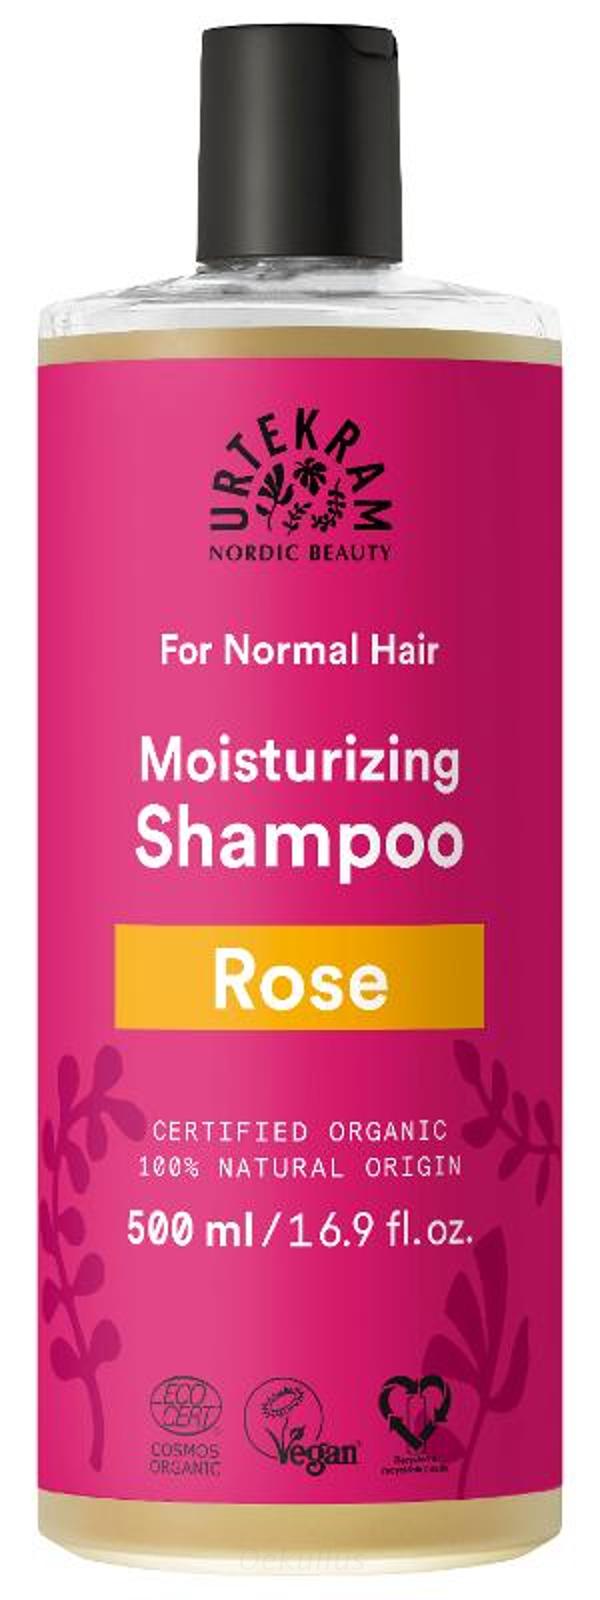 Produktfoto zu Rose Shampoo 500ml